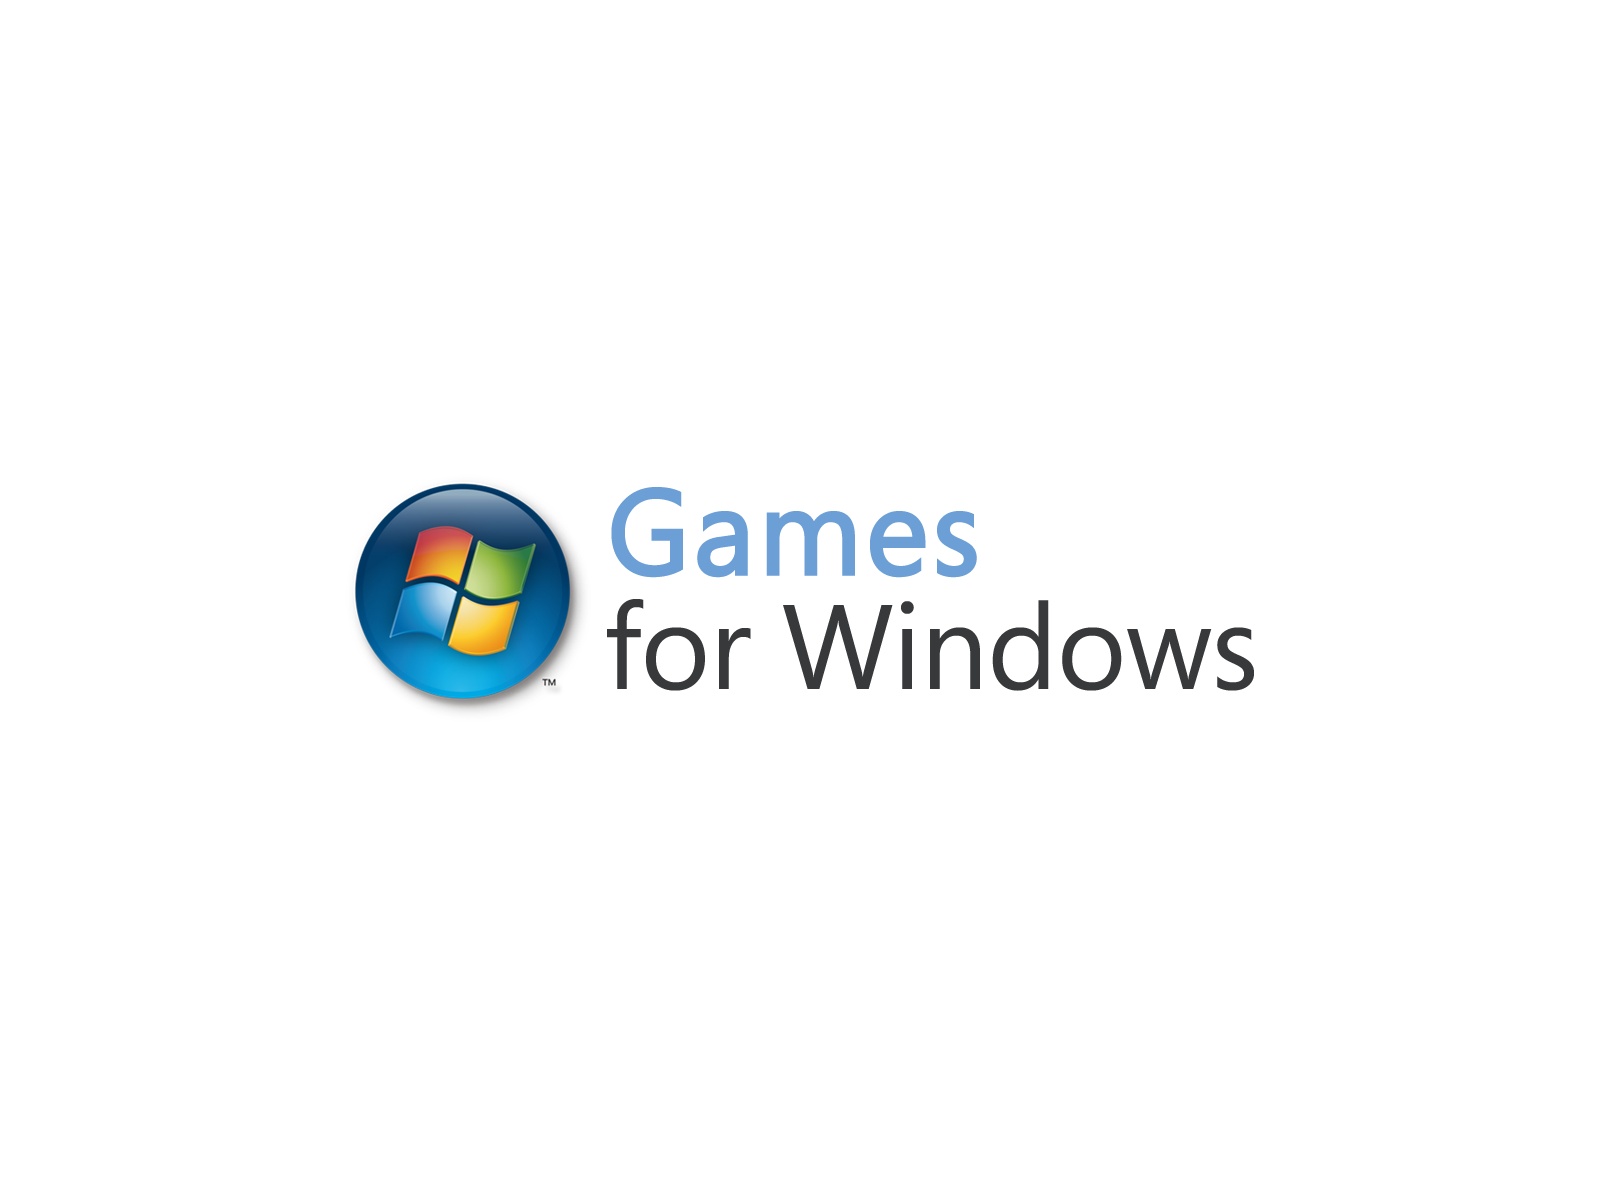 Windows mr. Games for Windows. Microsoft games for Windows. Логотип games for Windows. Microsoft games for Windows Live.